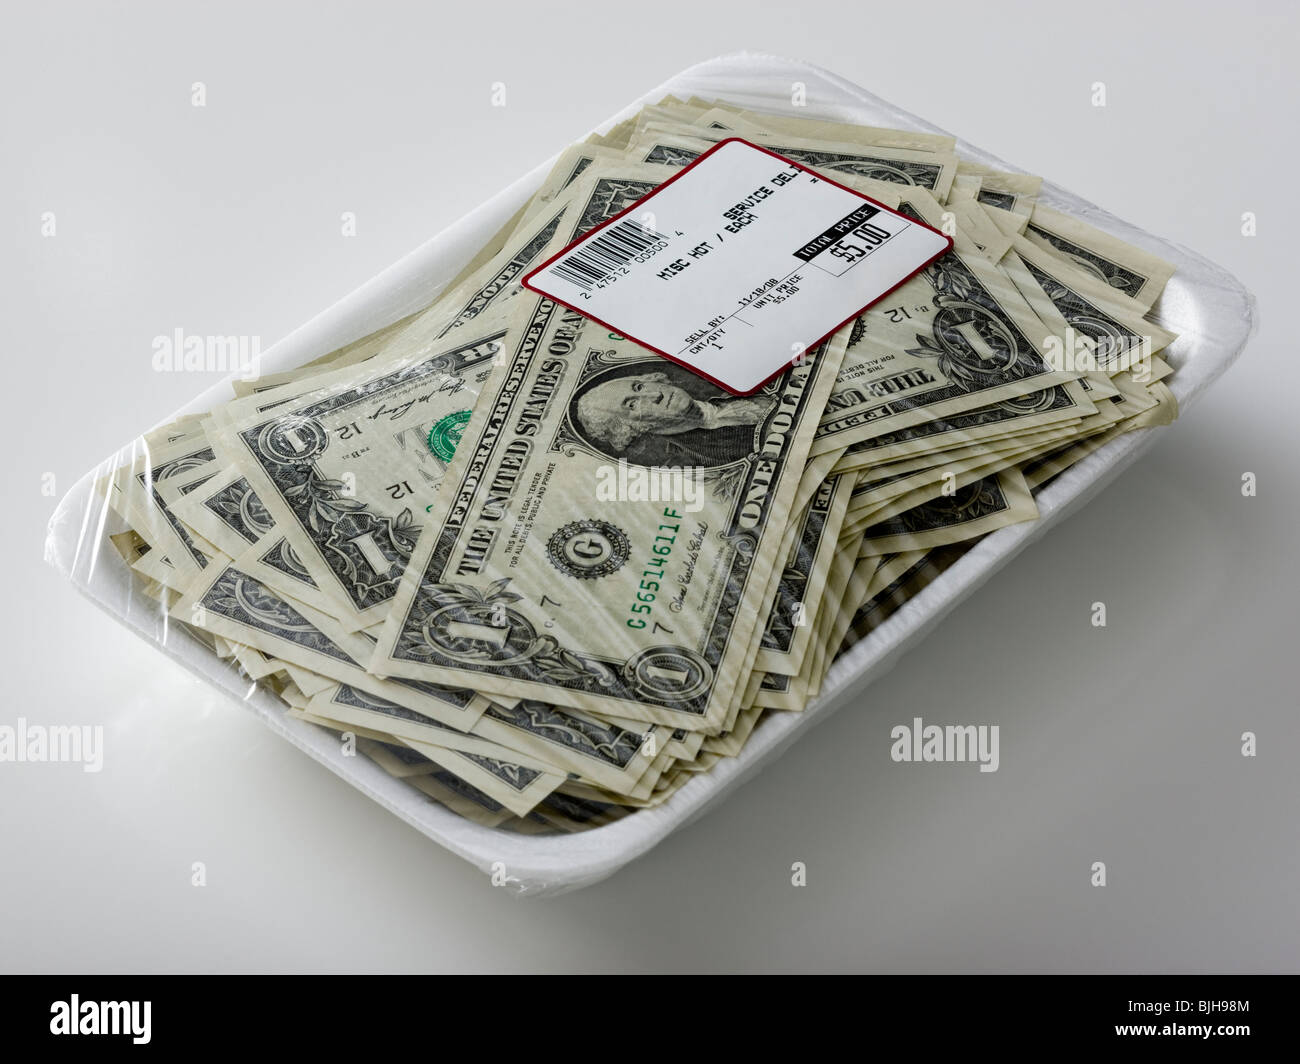 US-Dollar in einem Supermarkt Konturvereinfachung Paket Stockfoto